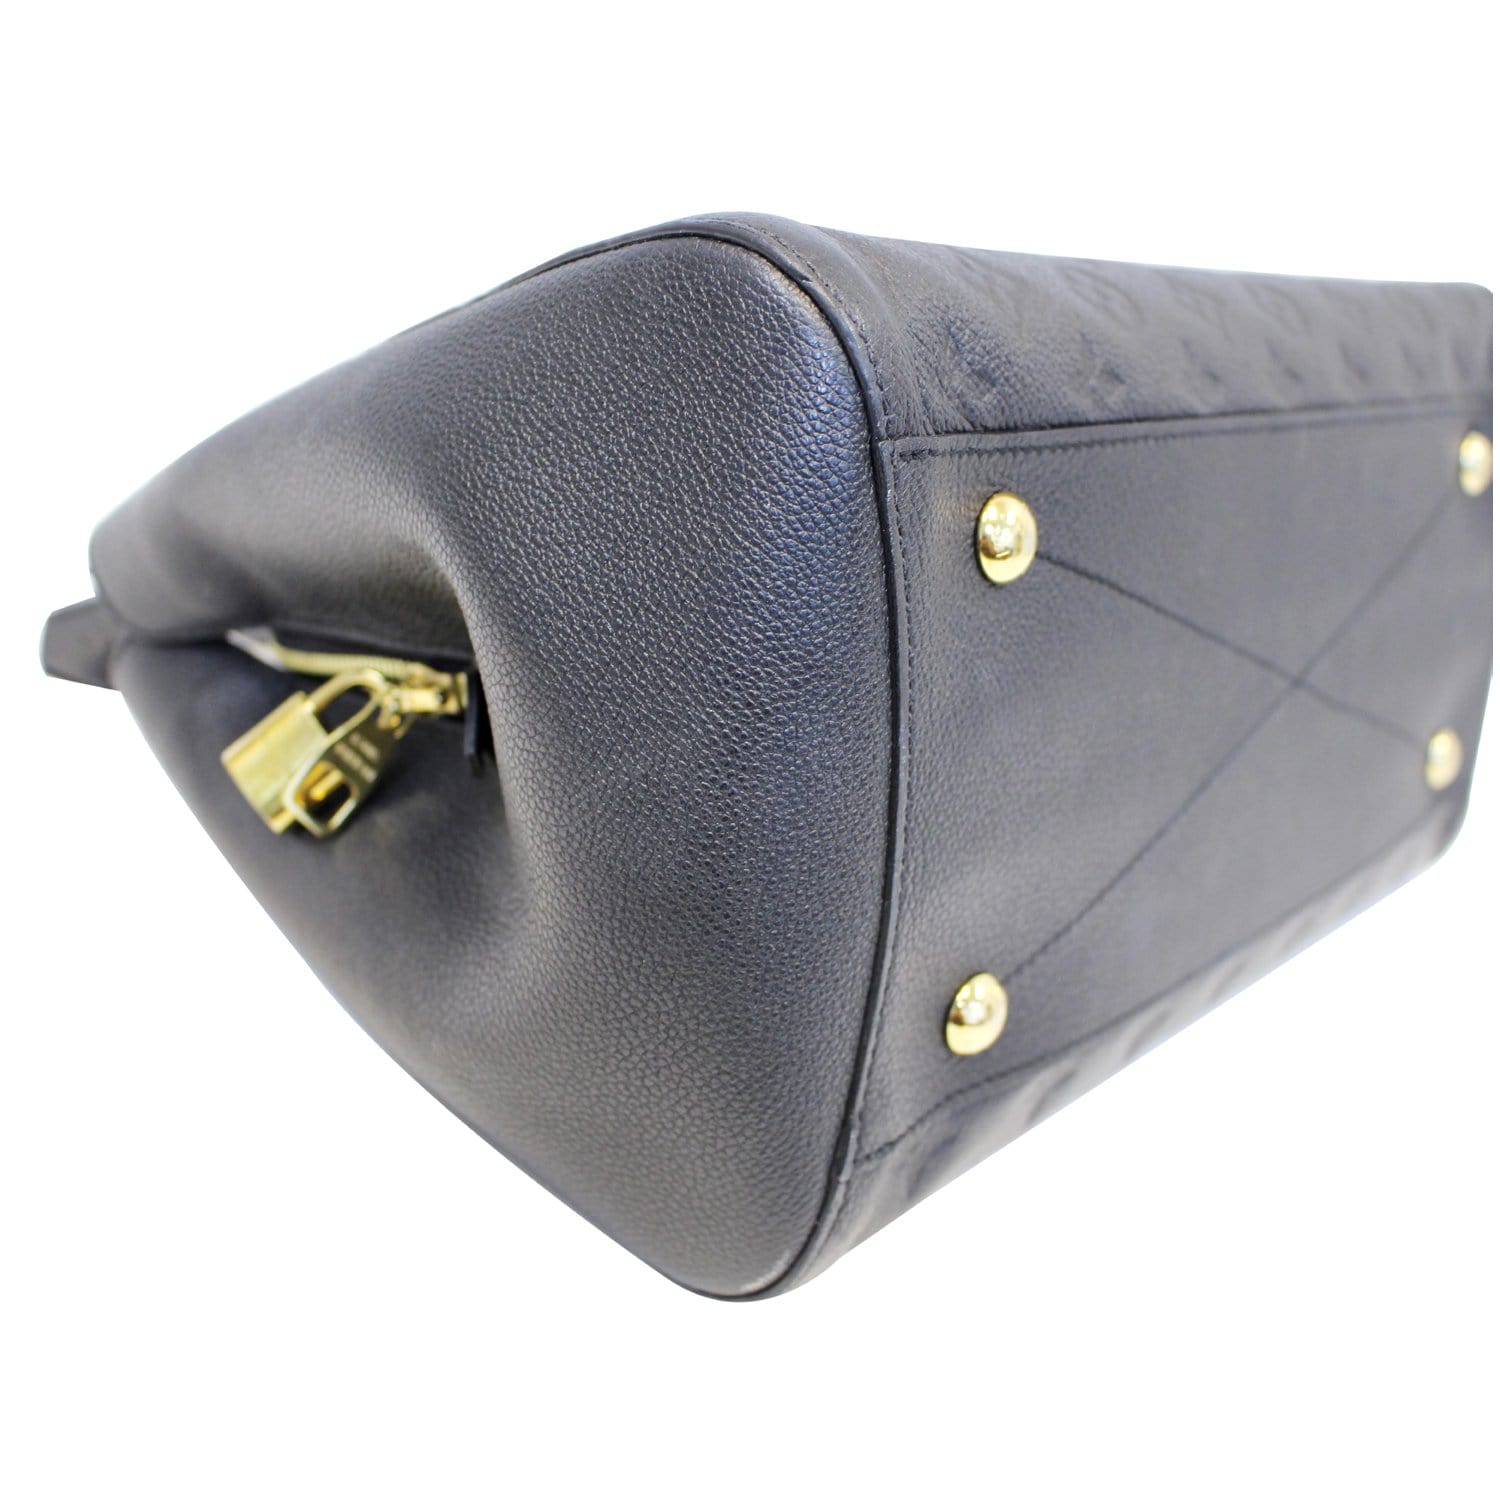 Louis Vuitton Black Monogram Empreinte Leather Montaigne GM Bag